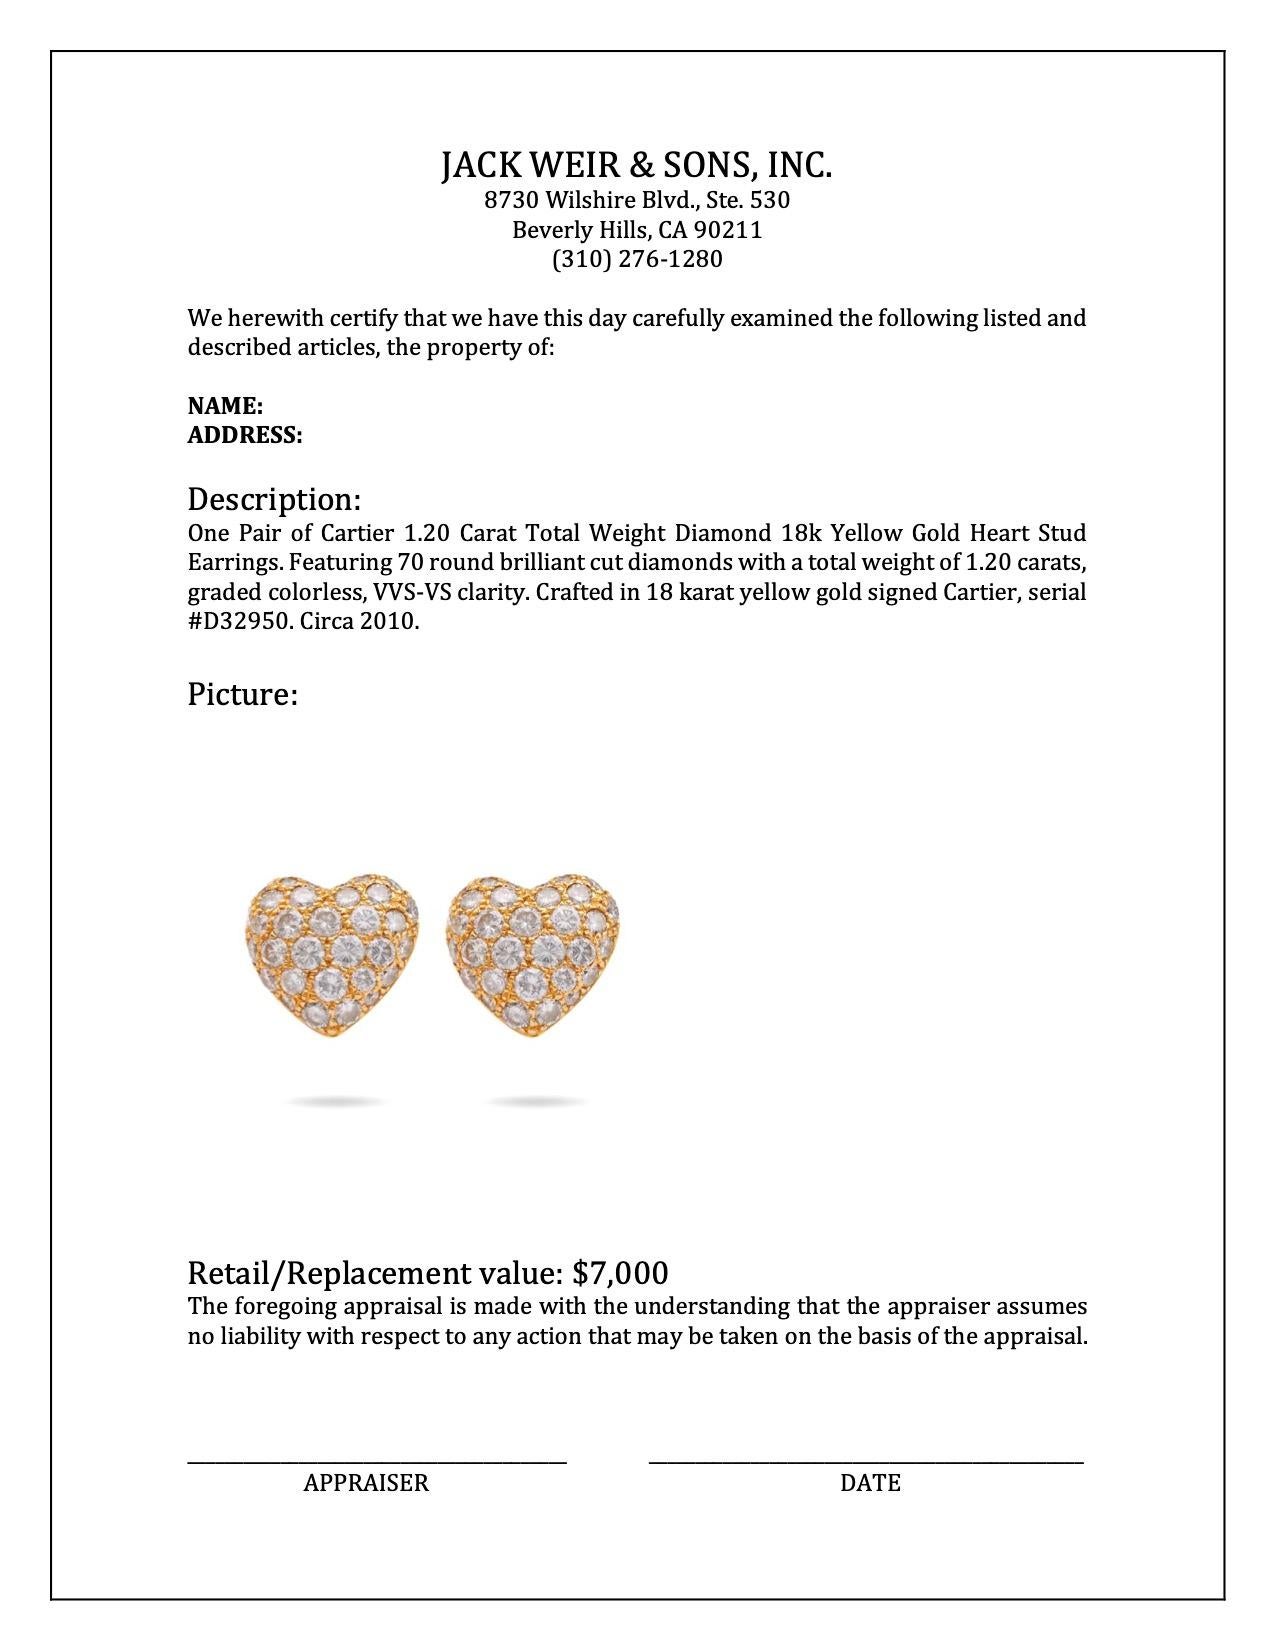 Women's or Men's Pair of Cartier 1.20 Carat Total Weight Diamond 18k Gold Heart Stud Earrings For Sale